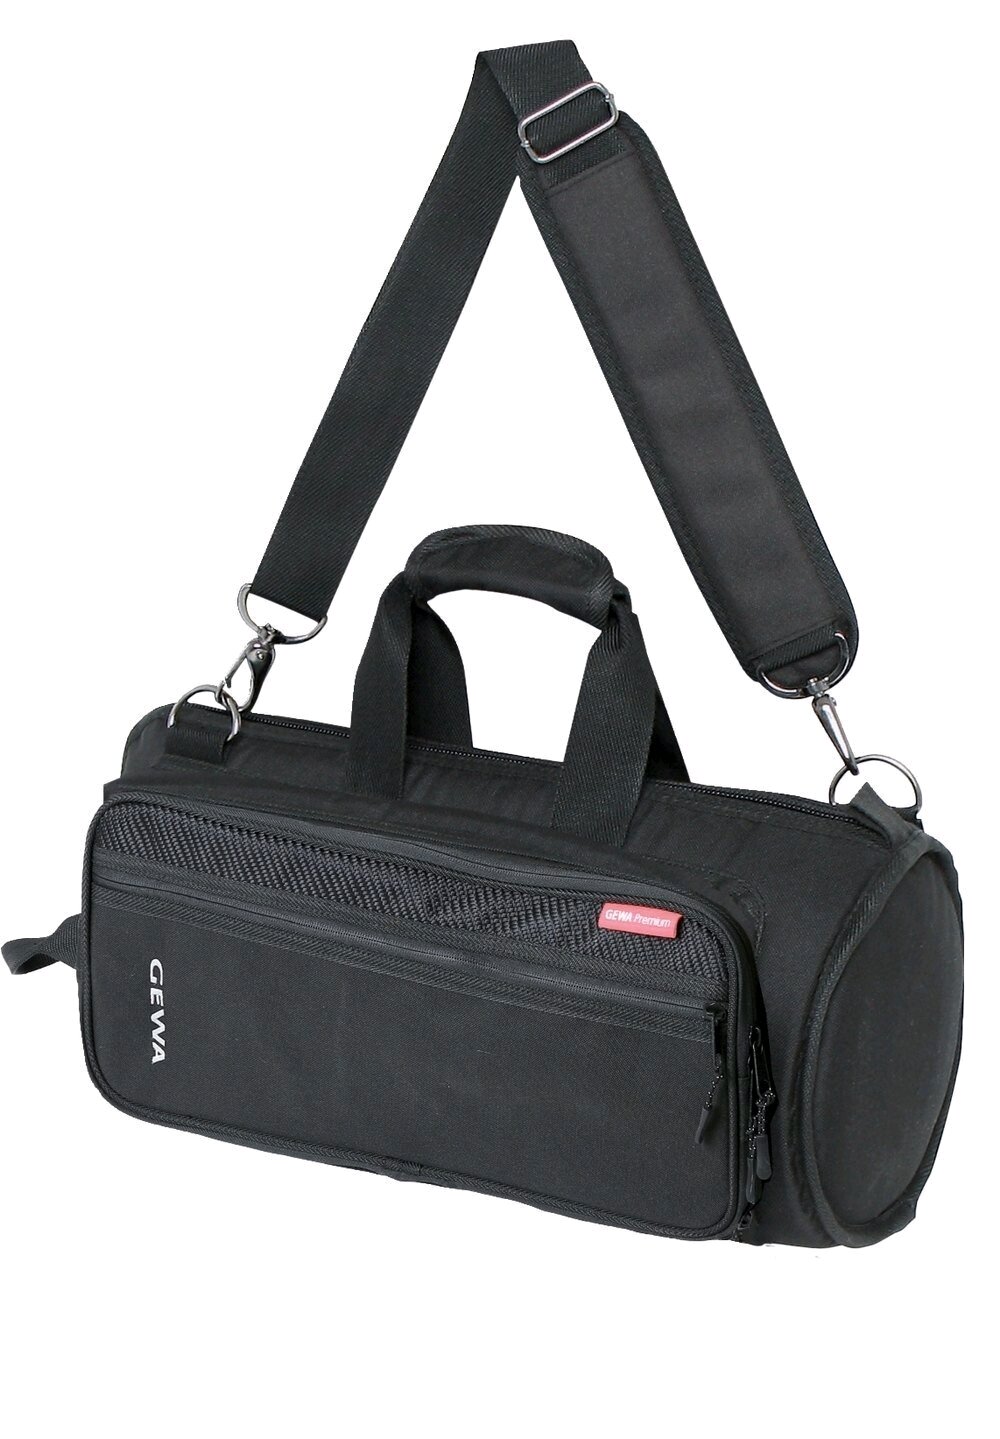 Gewa Bag for Cornet - Premium : photo 1